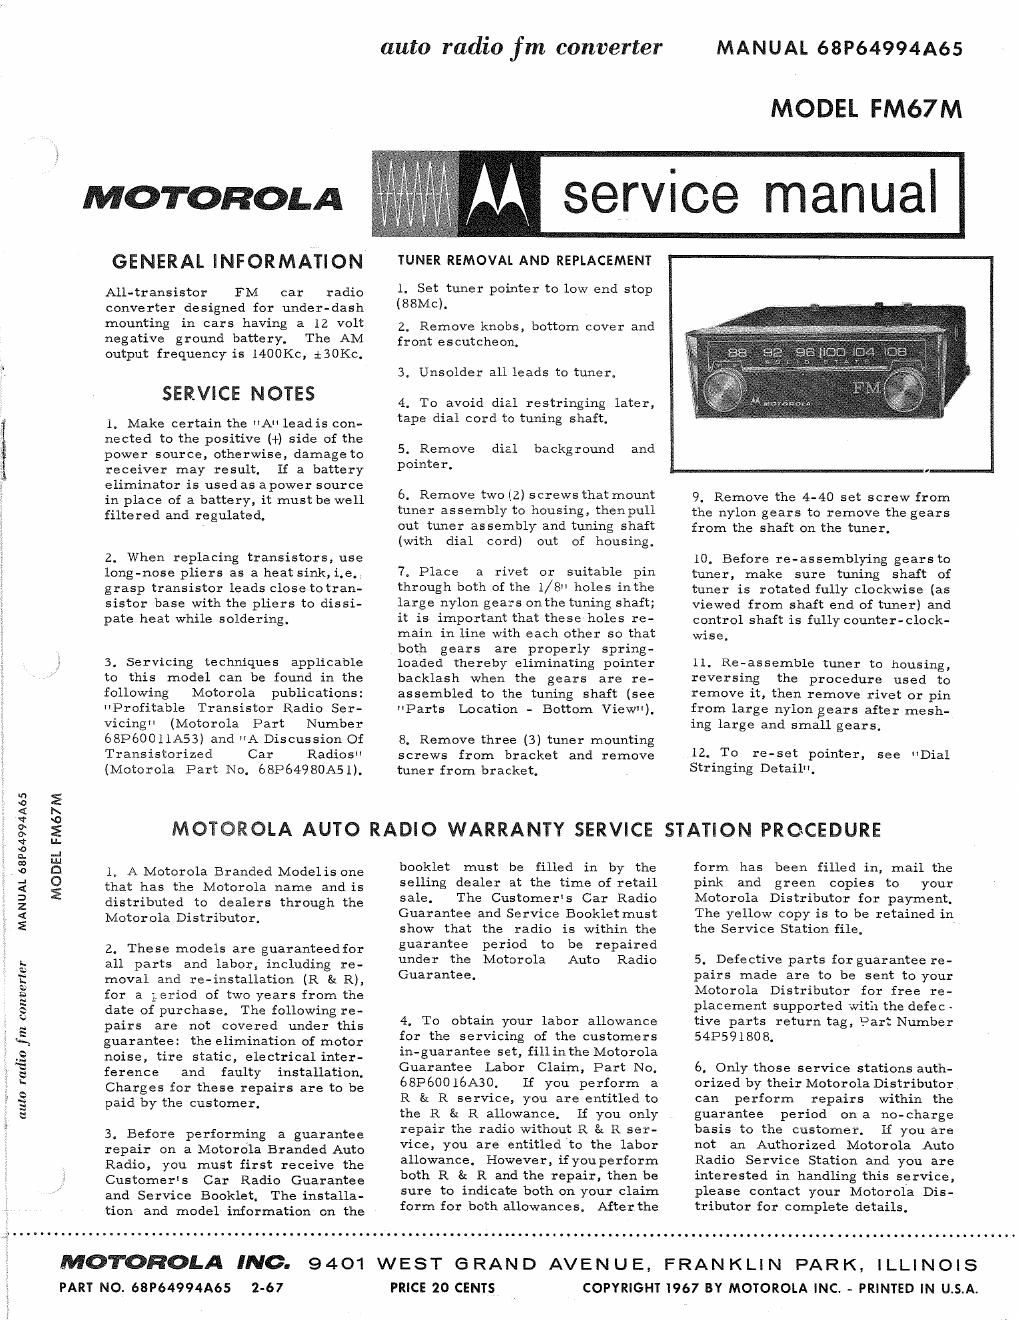 motorola fm 67 m service manual